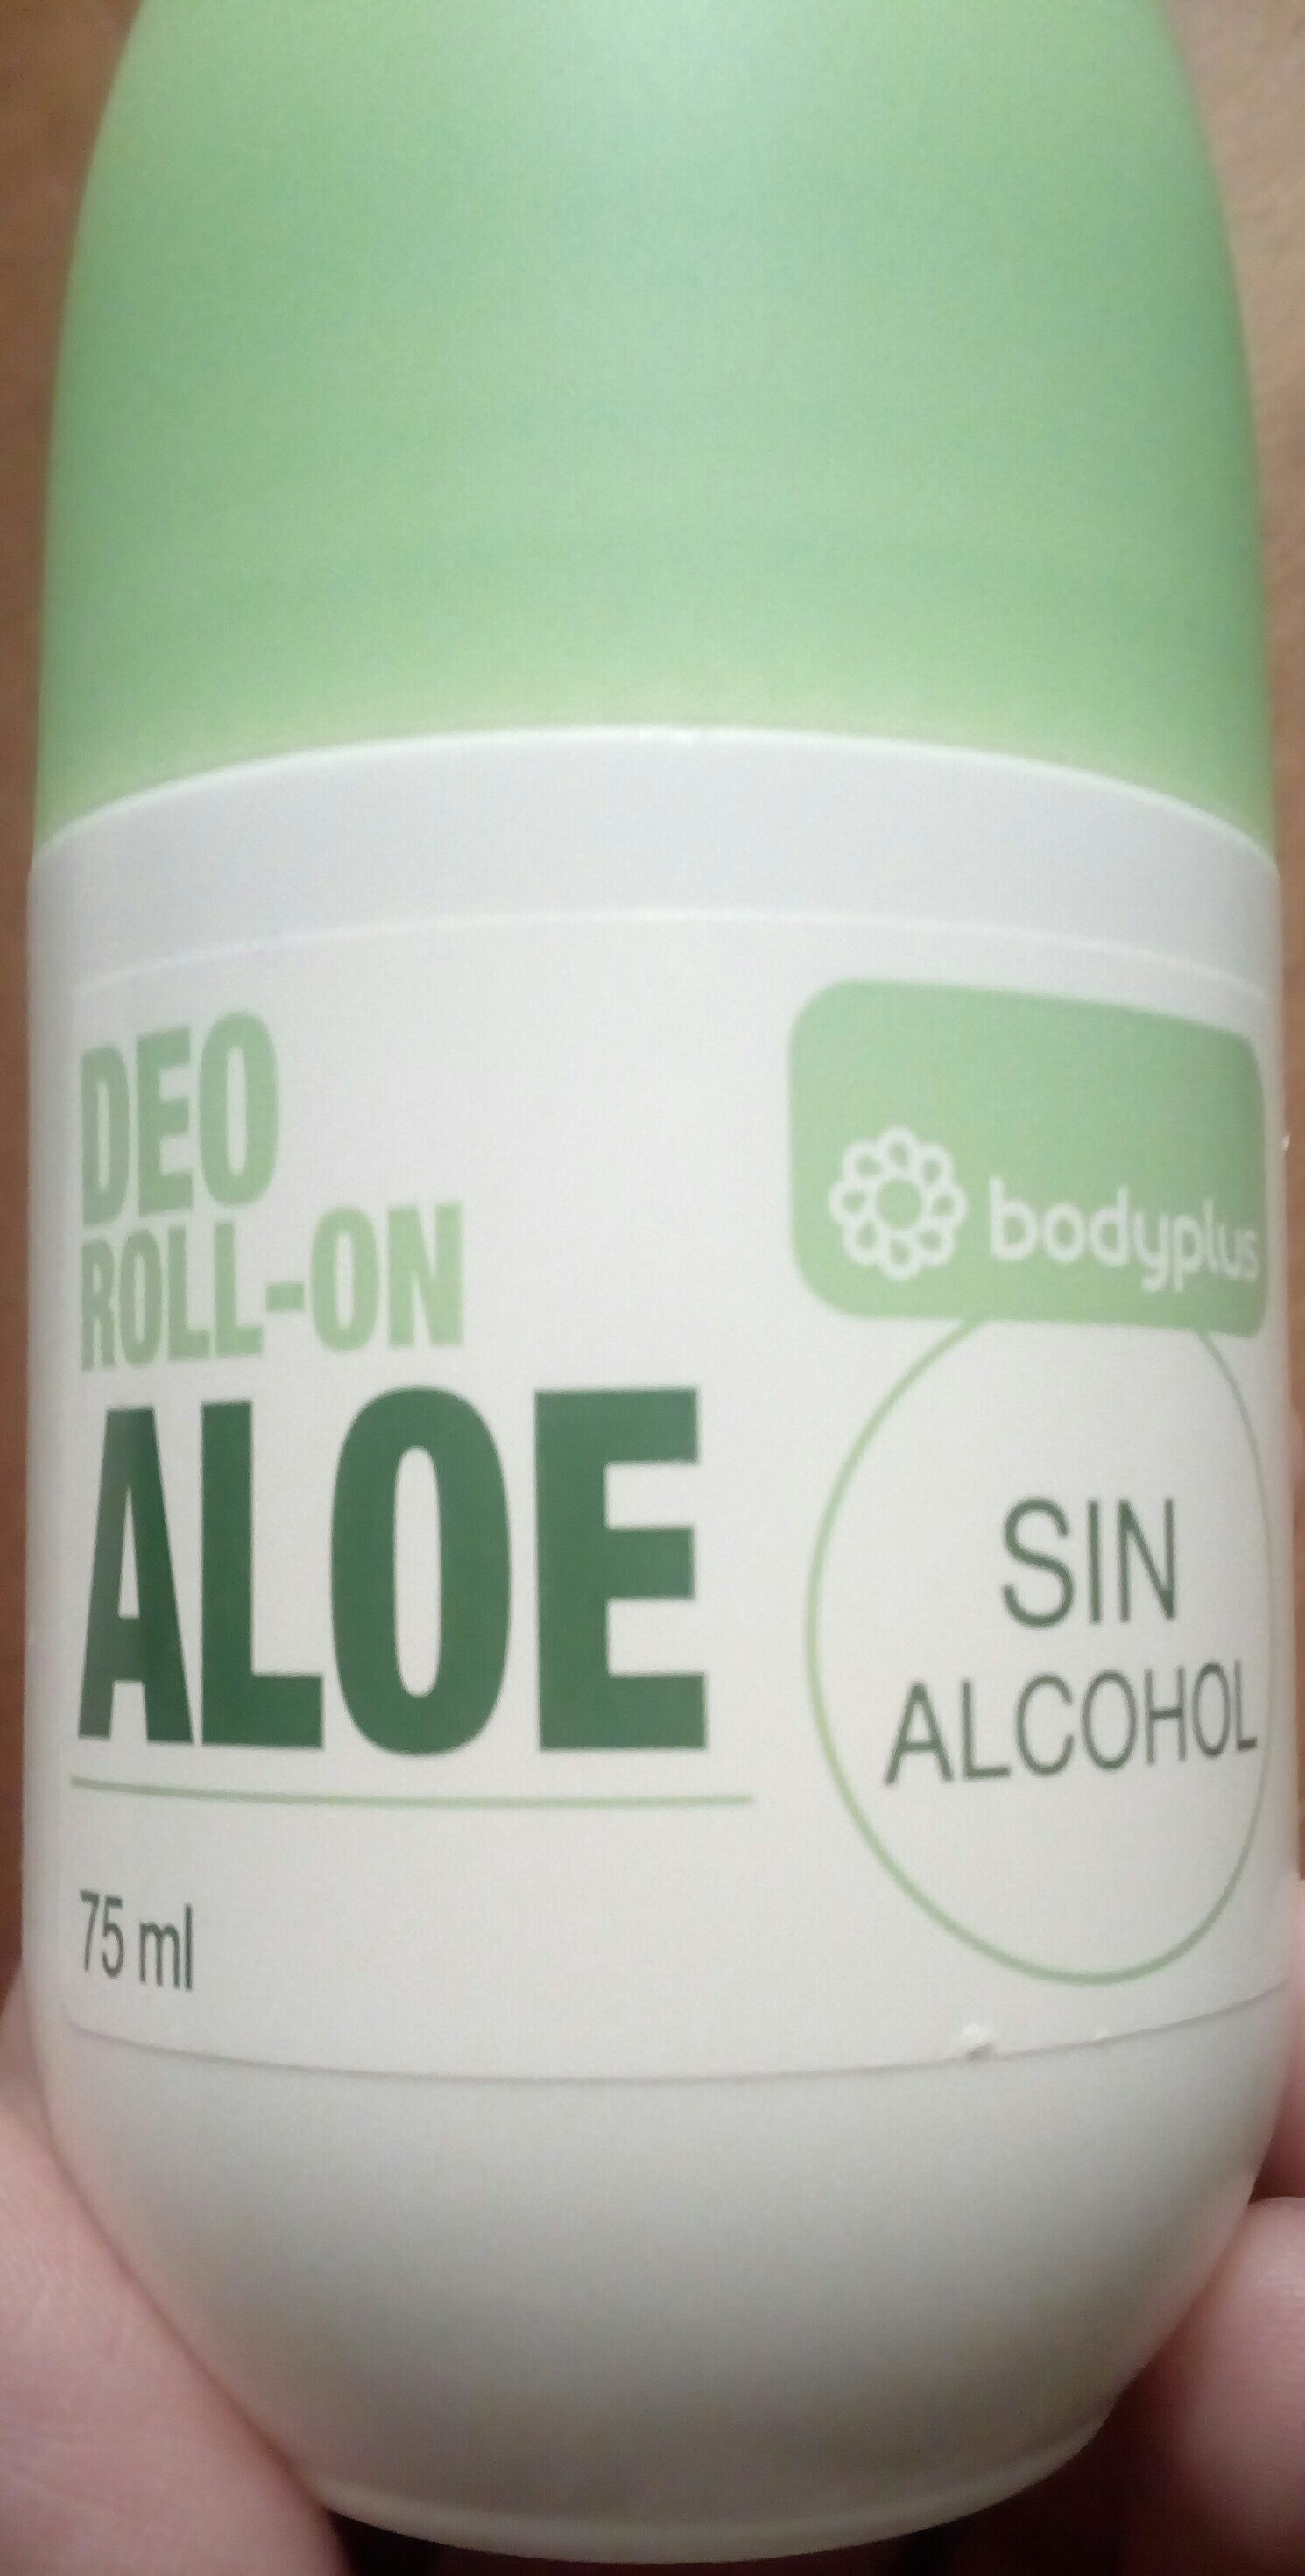 Deo Roll-on Aloe Vera - Product - es